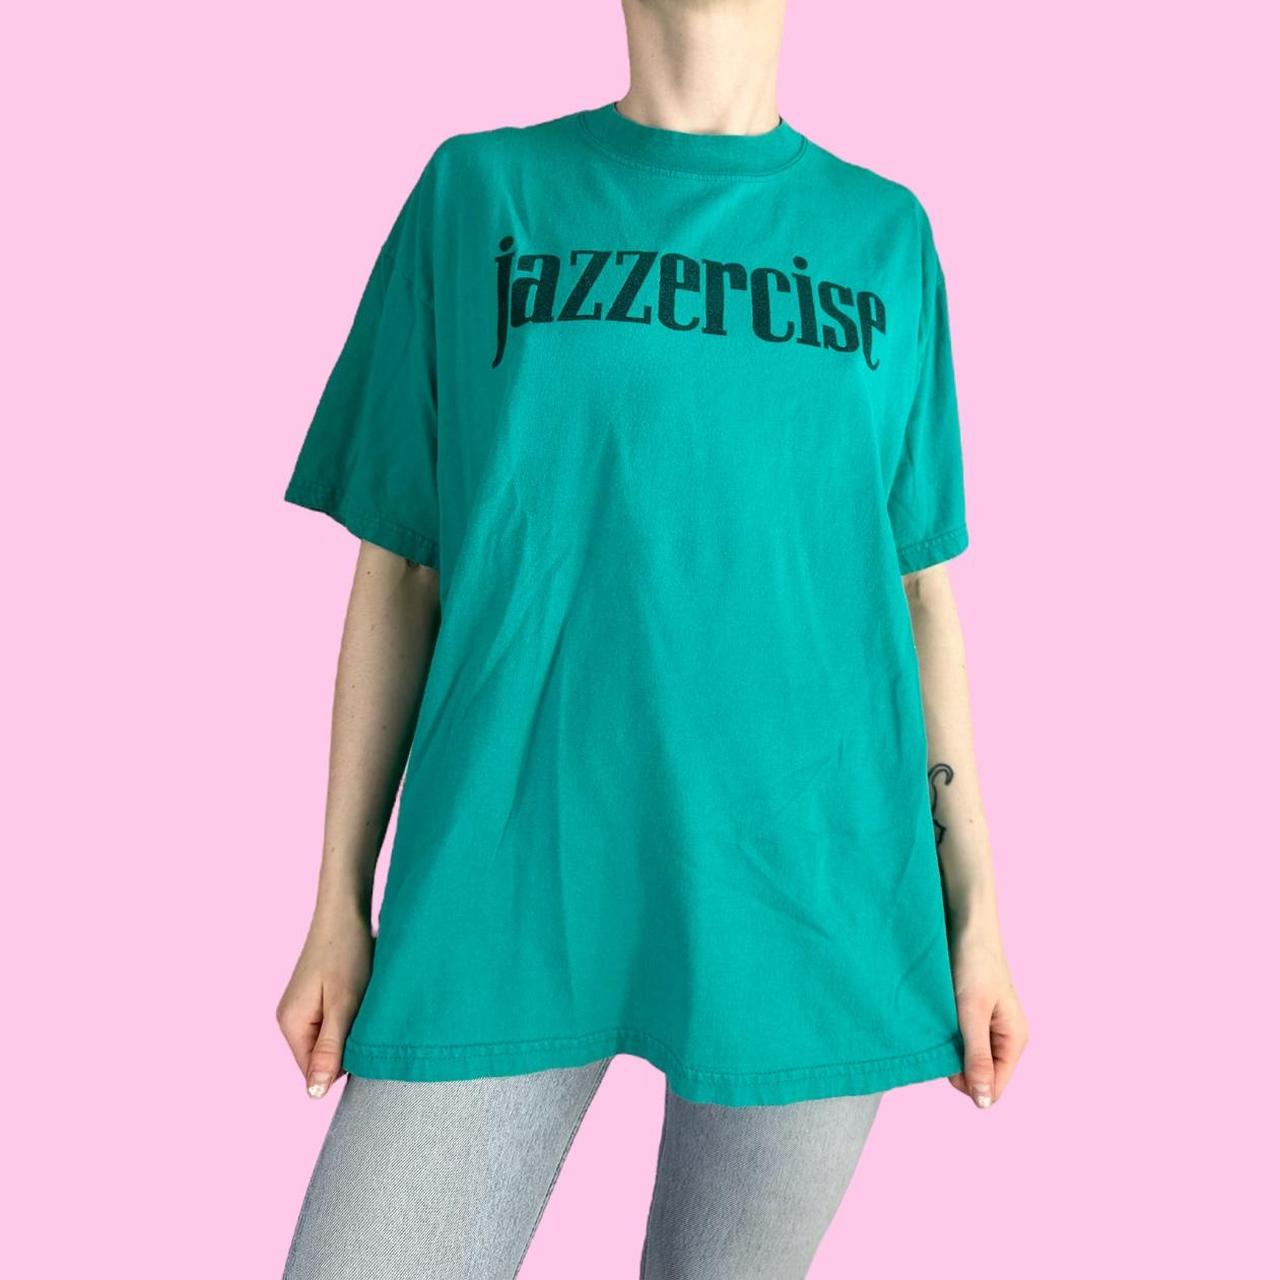 Vintage 90s Teal Blue Jazzercise T-shirt Pullover - Depop